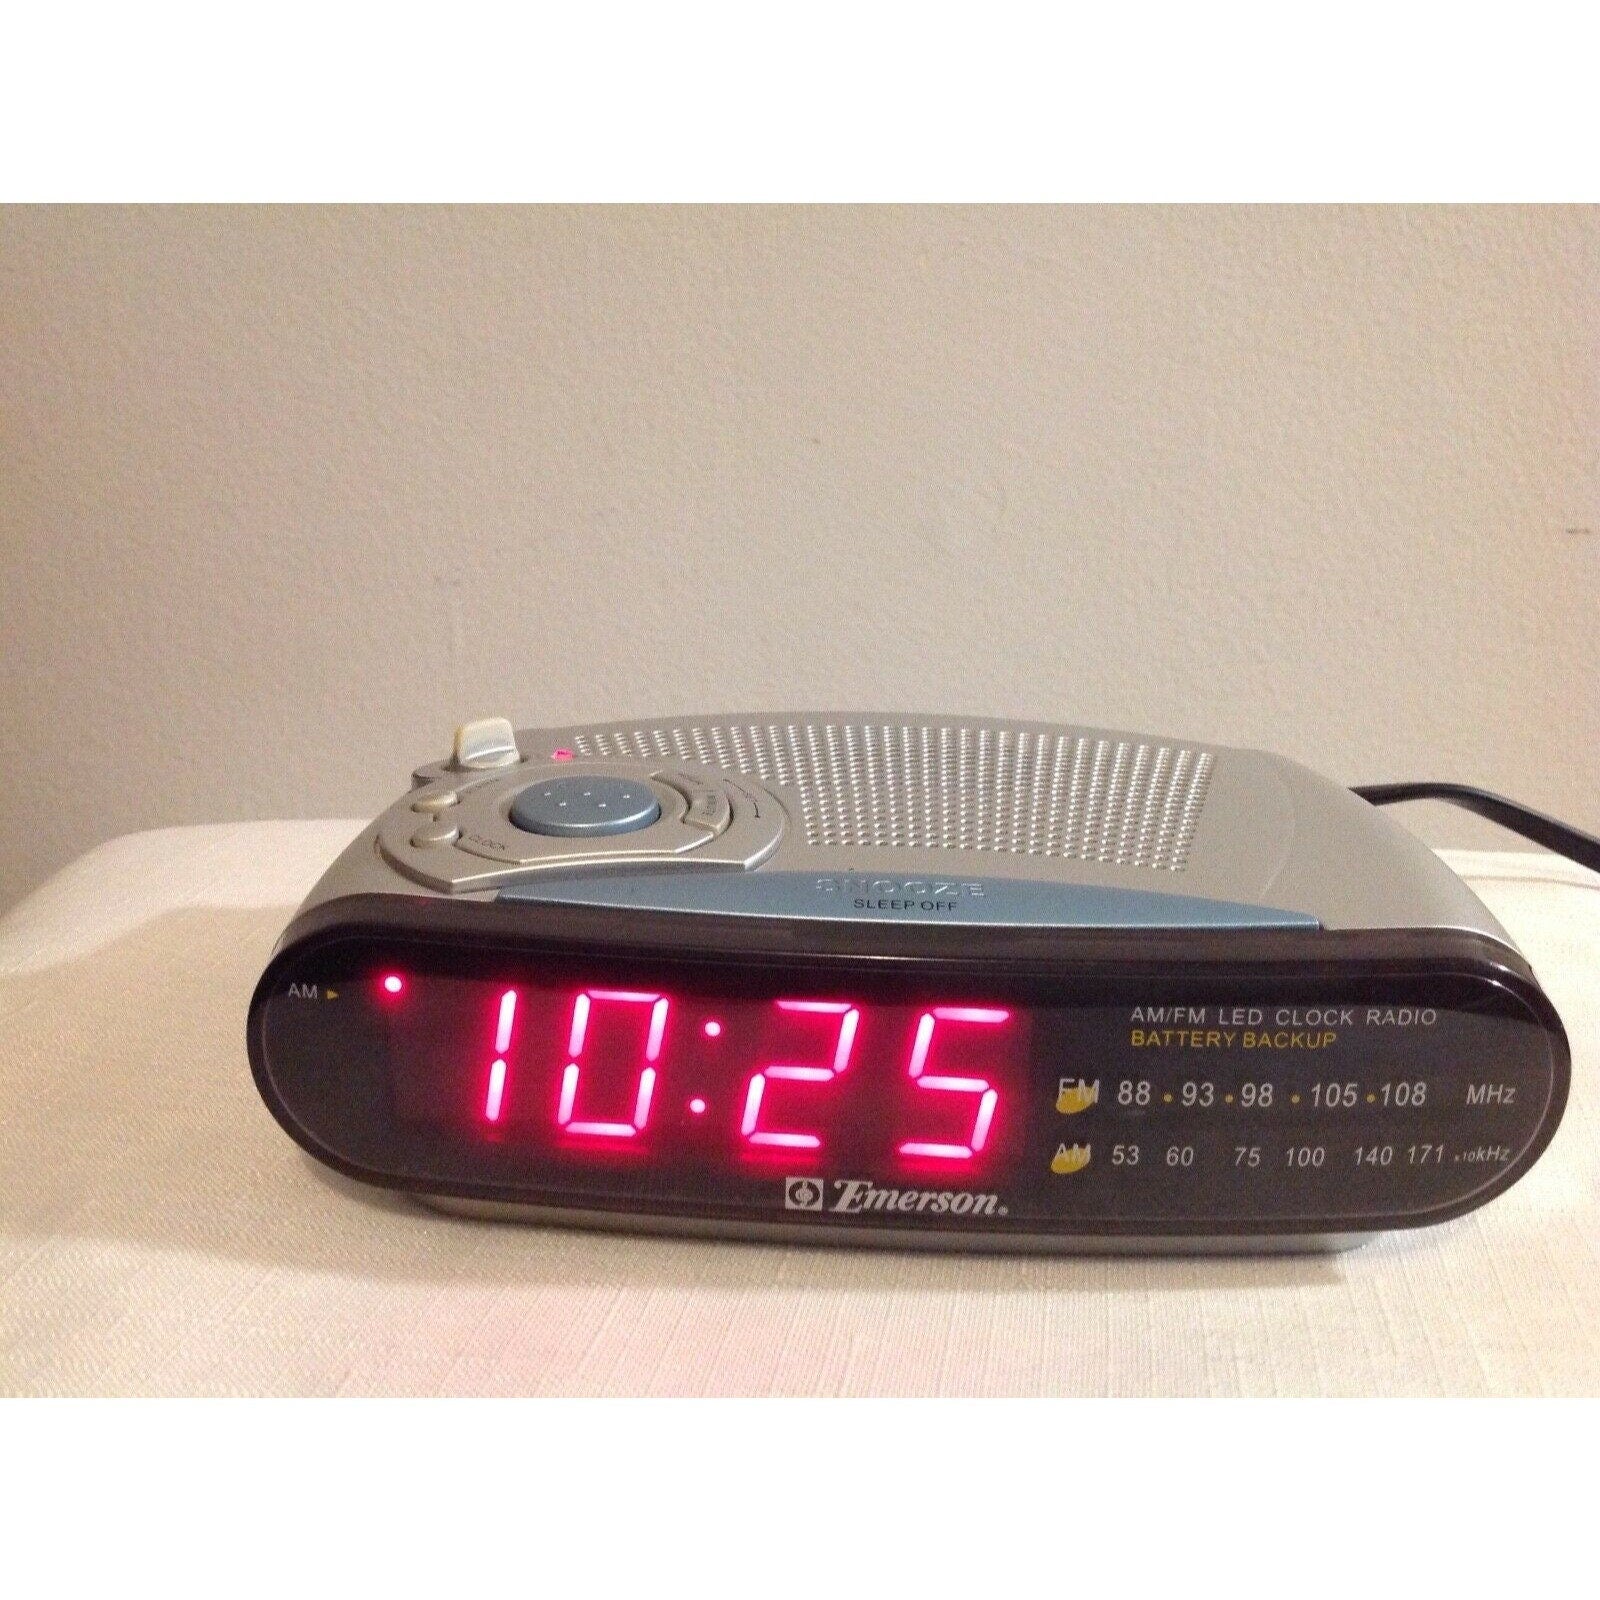 Emerson CK5029 AM/FM Digital LED Clock Radio-Snooze-Battery Backup